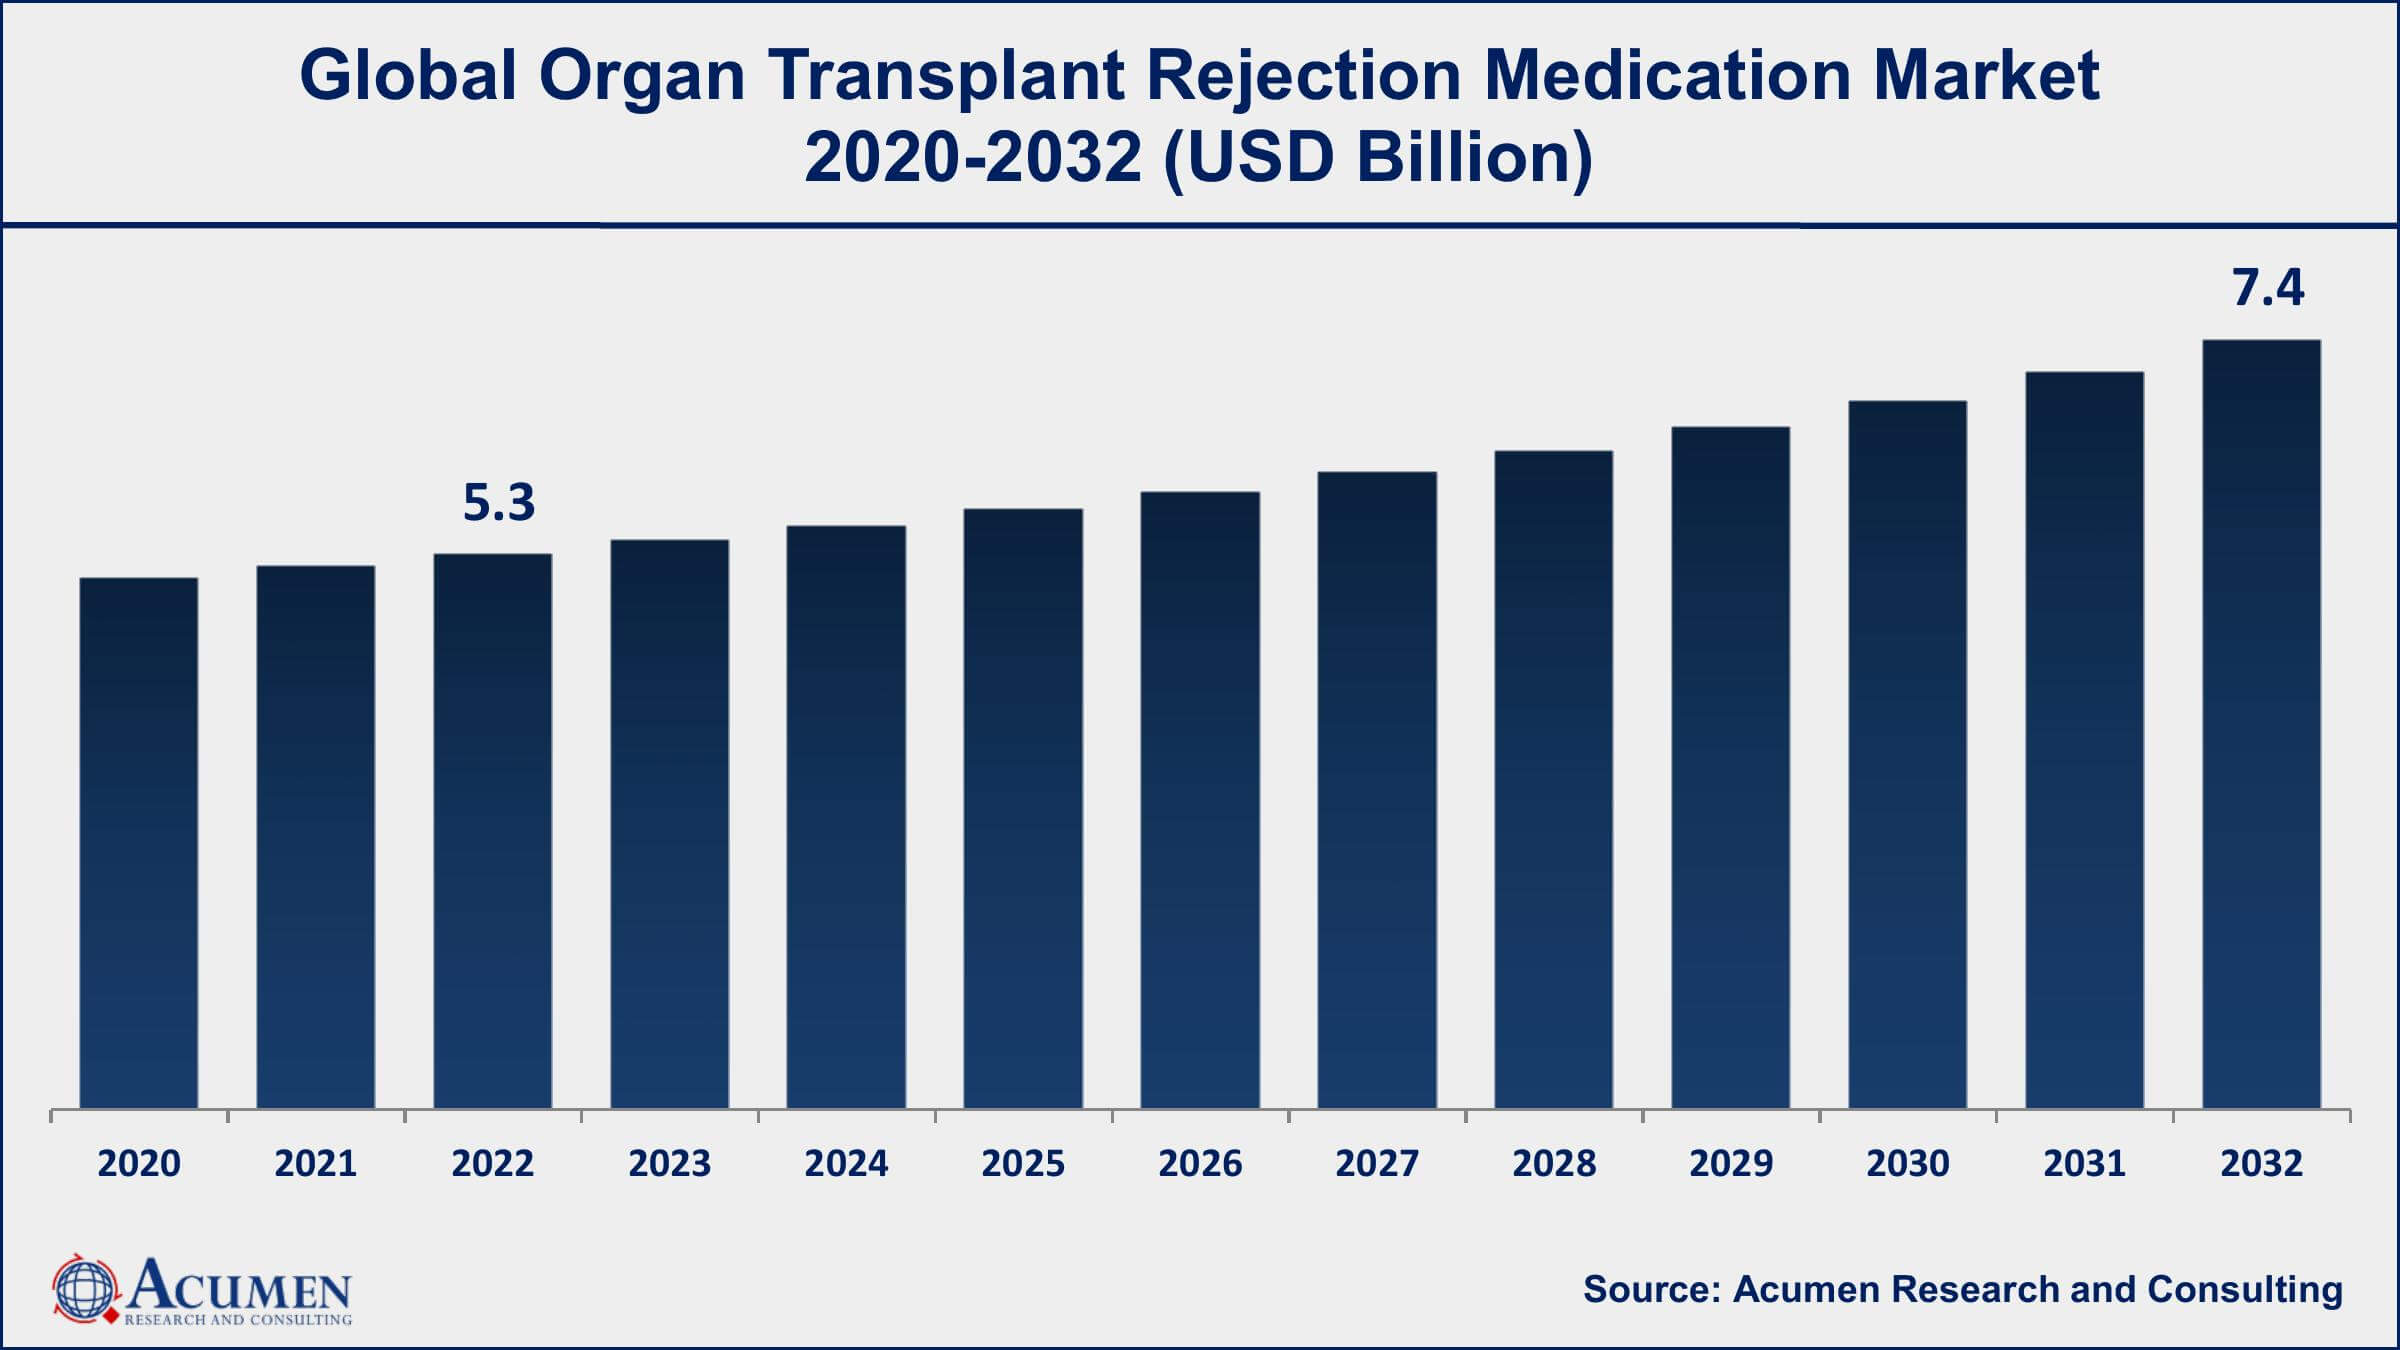 Organ Transplant Rejection Medication Market Drivers